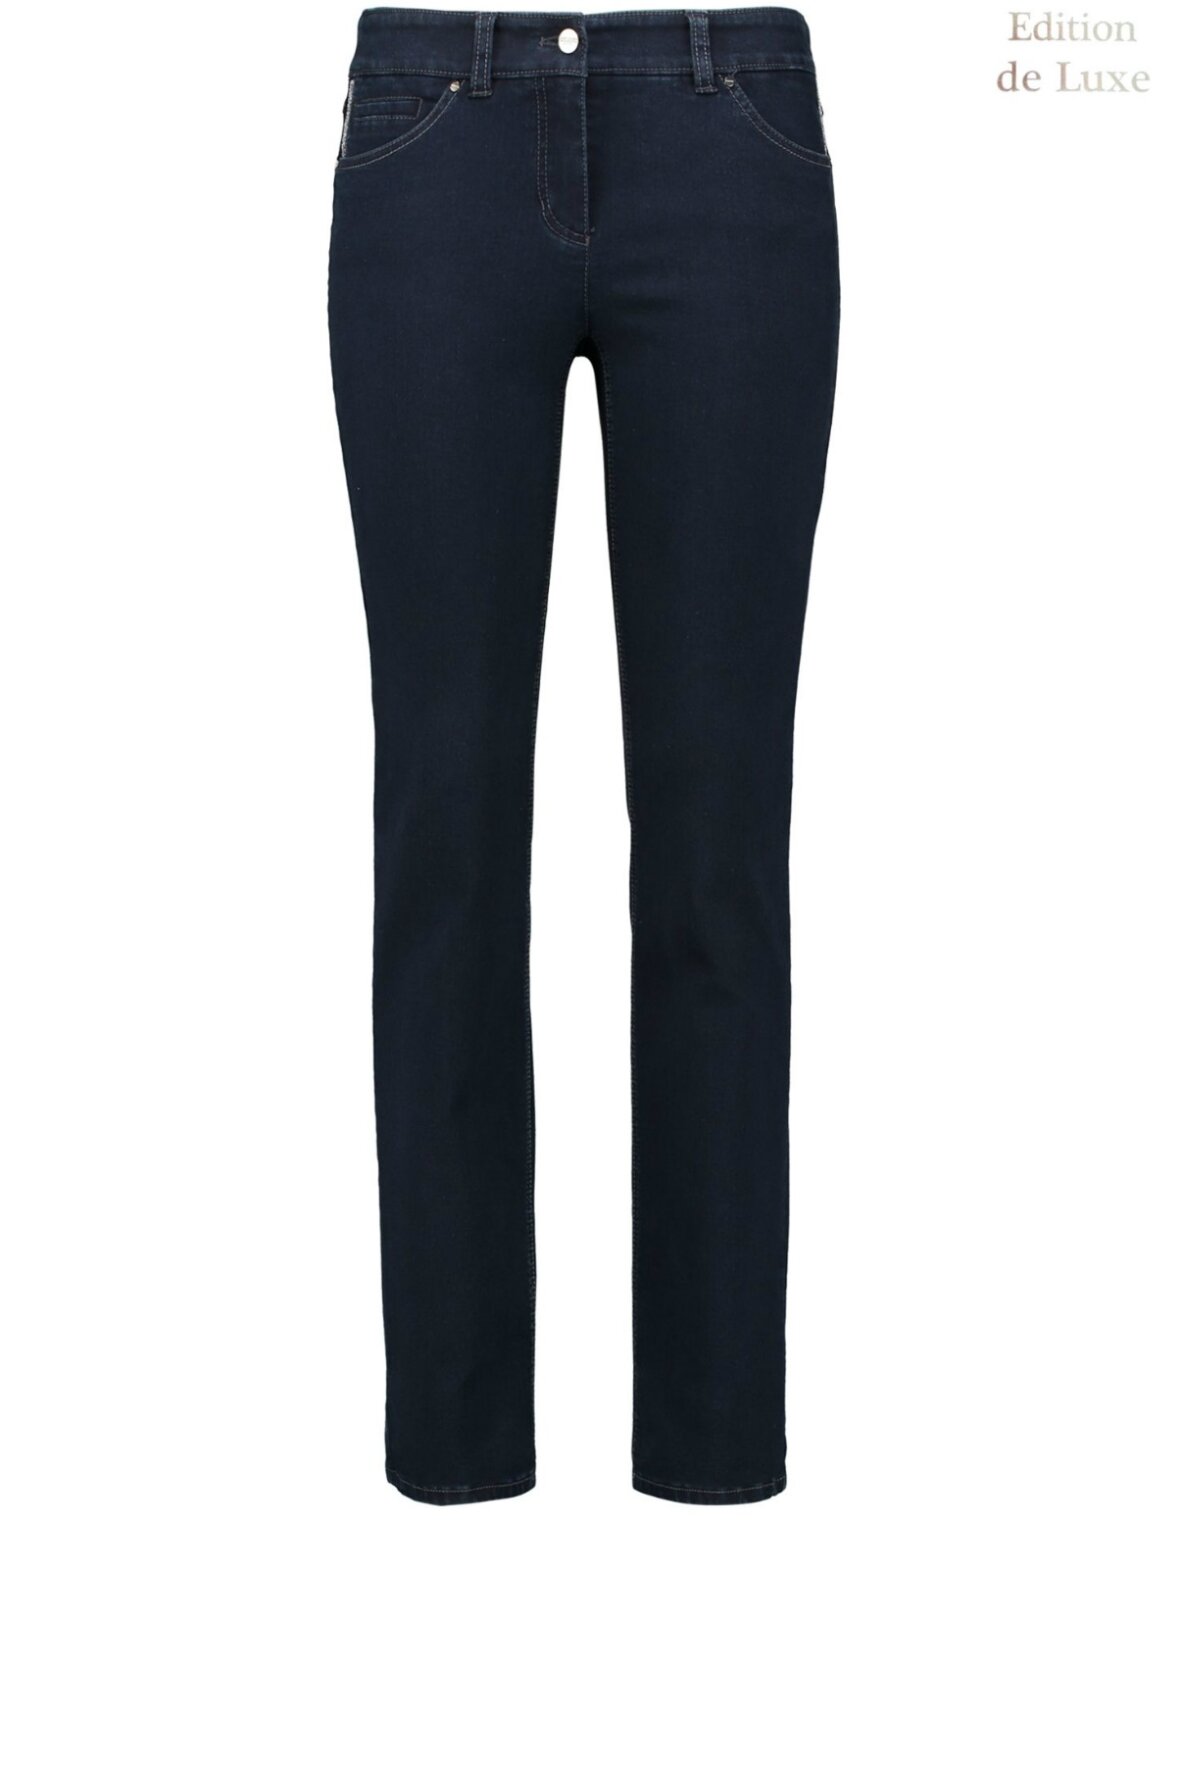 Gerry Weber Roxy Jeans, denim buks, 422001-67910 - Lohse